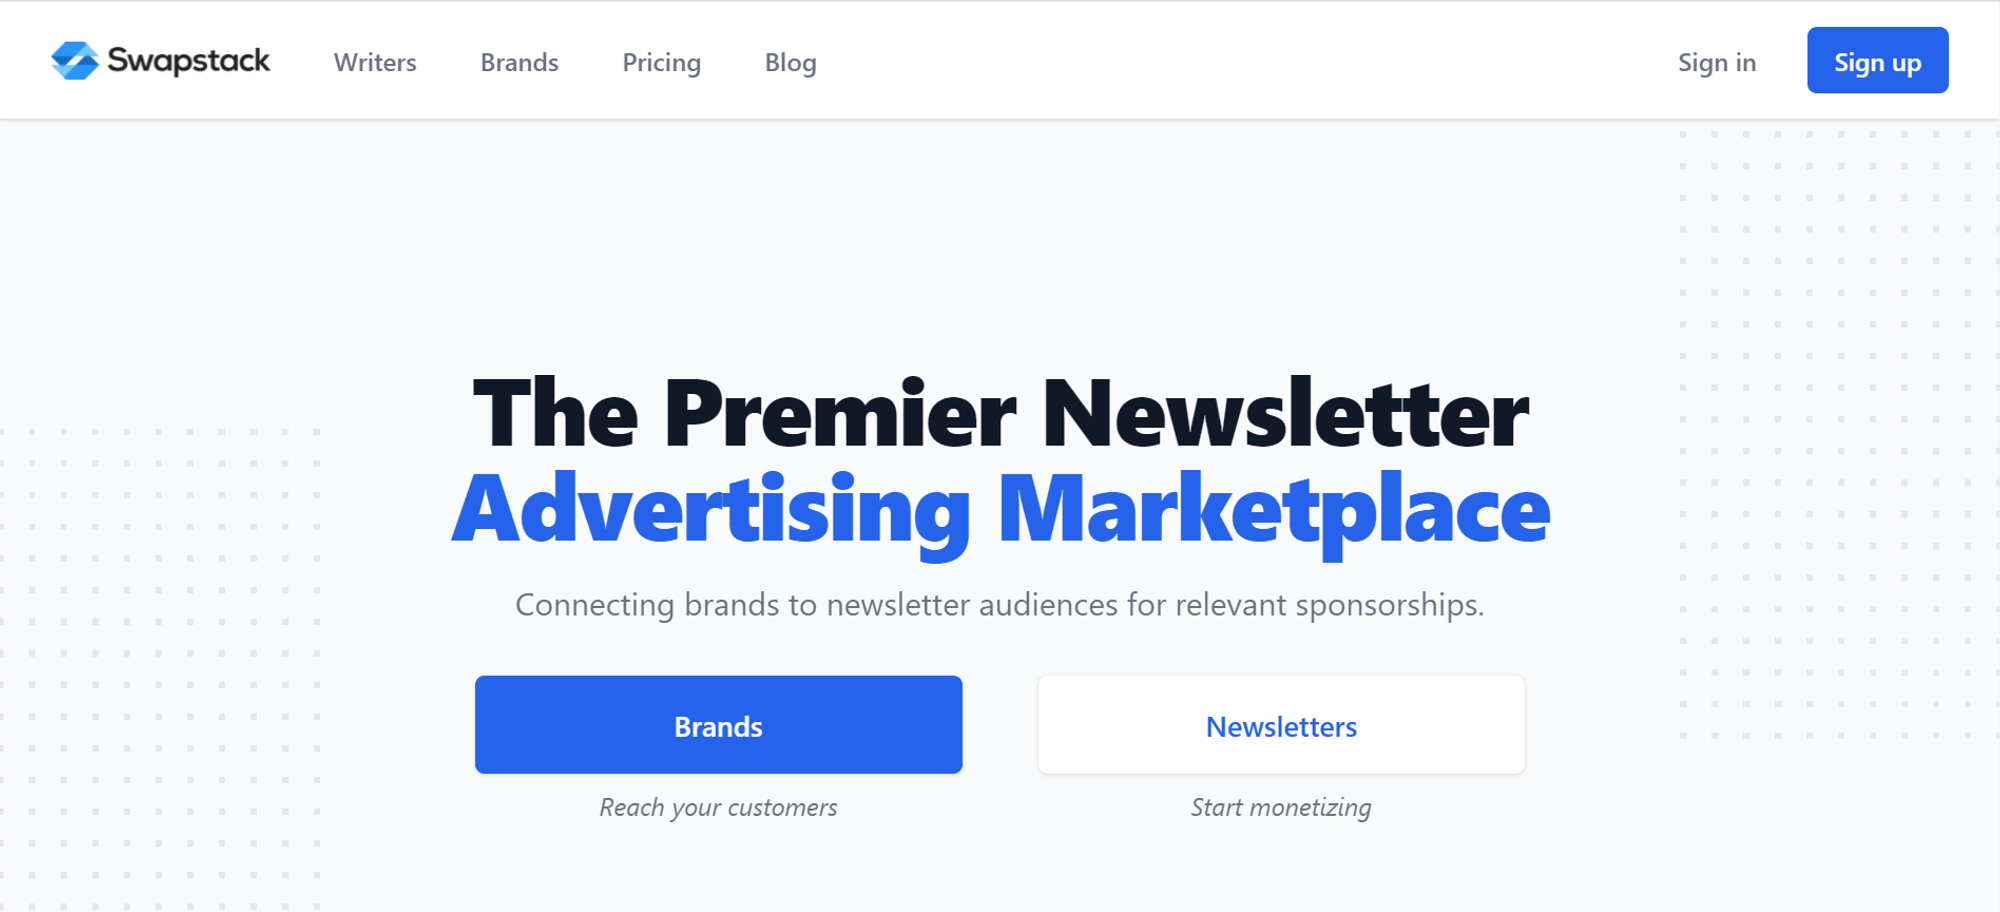 Swapstack - Premier Newsletter Advertising Marketplace 💌